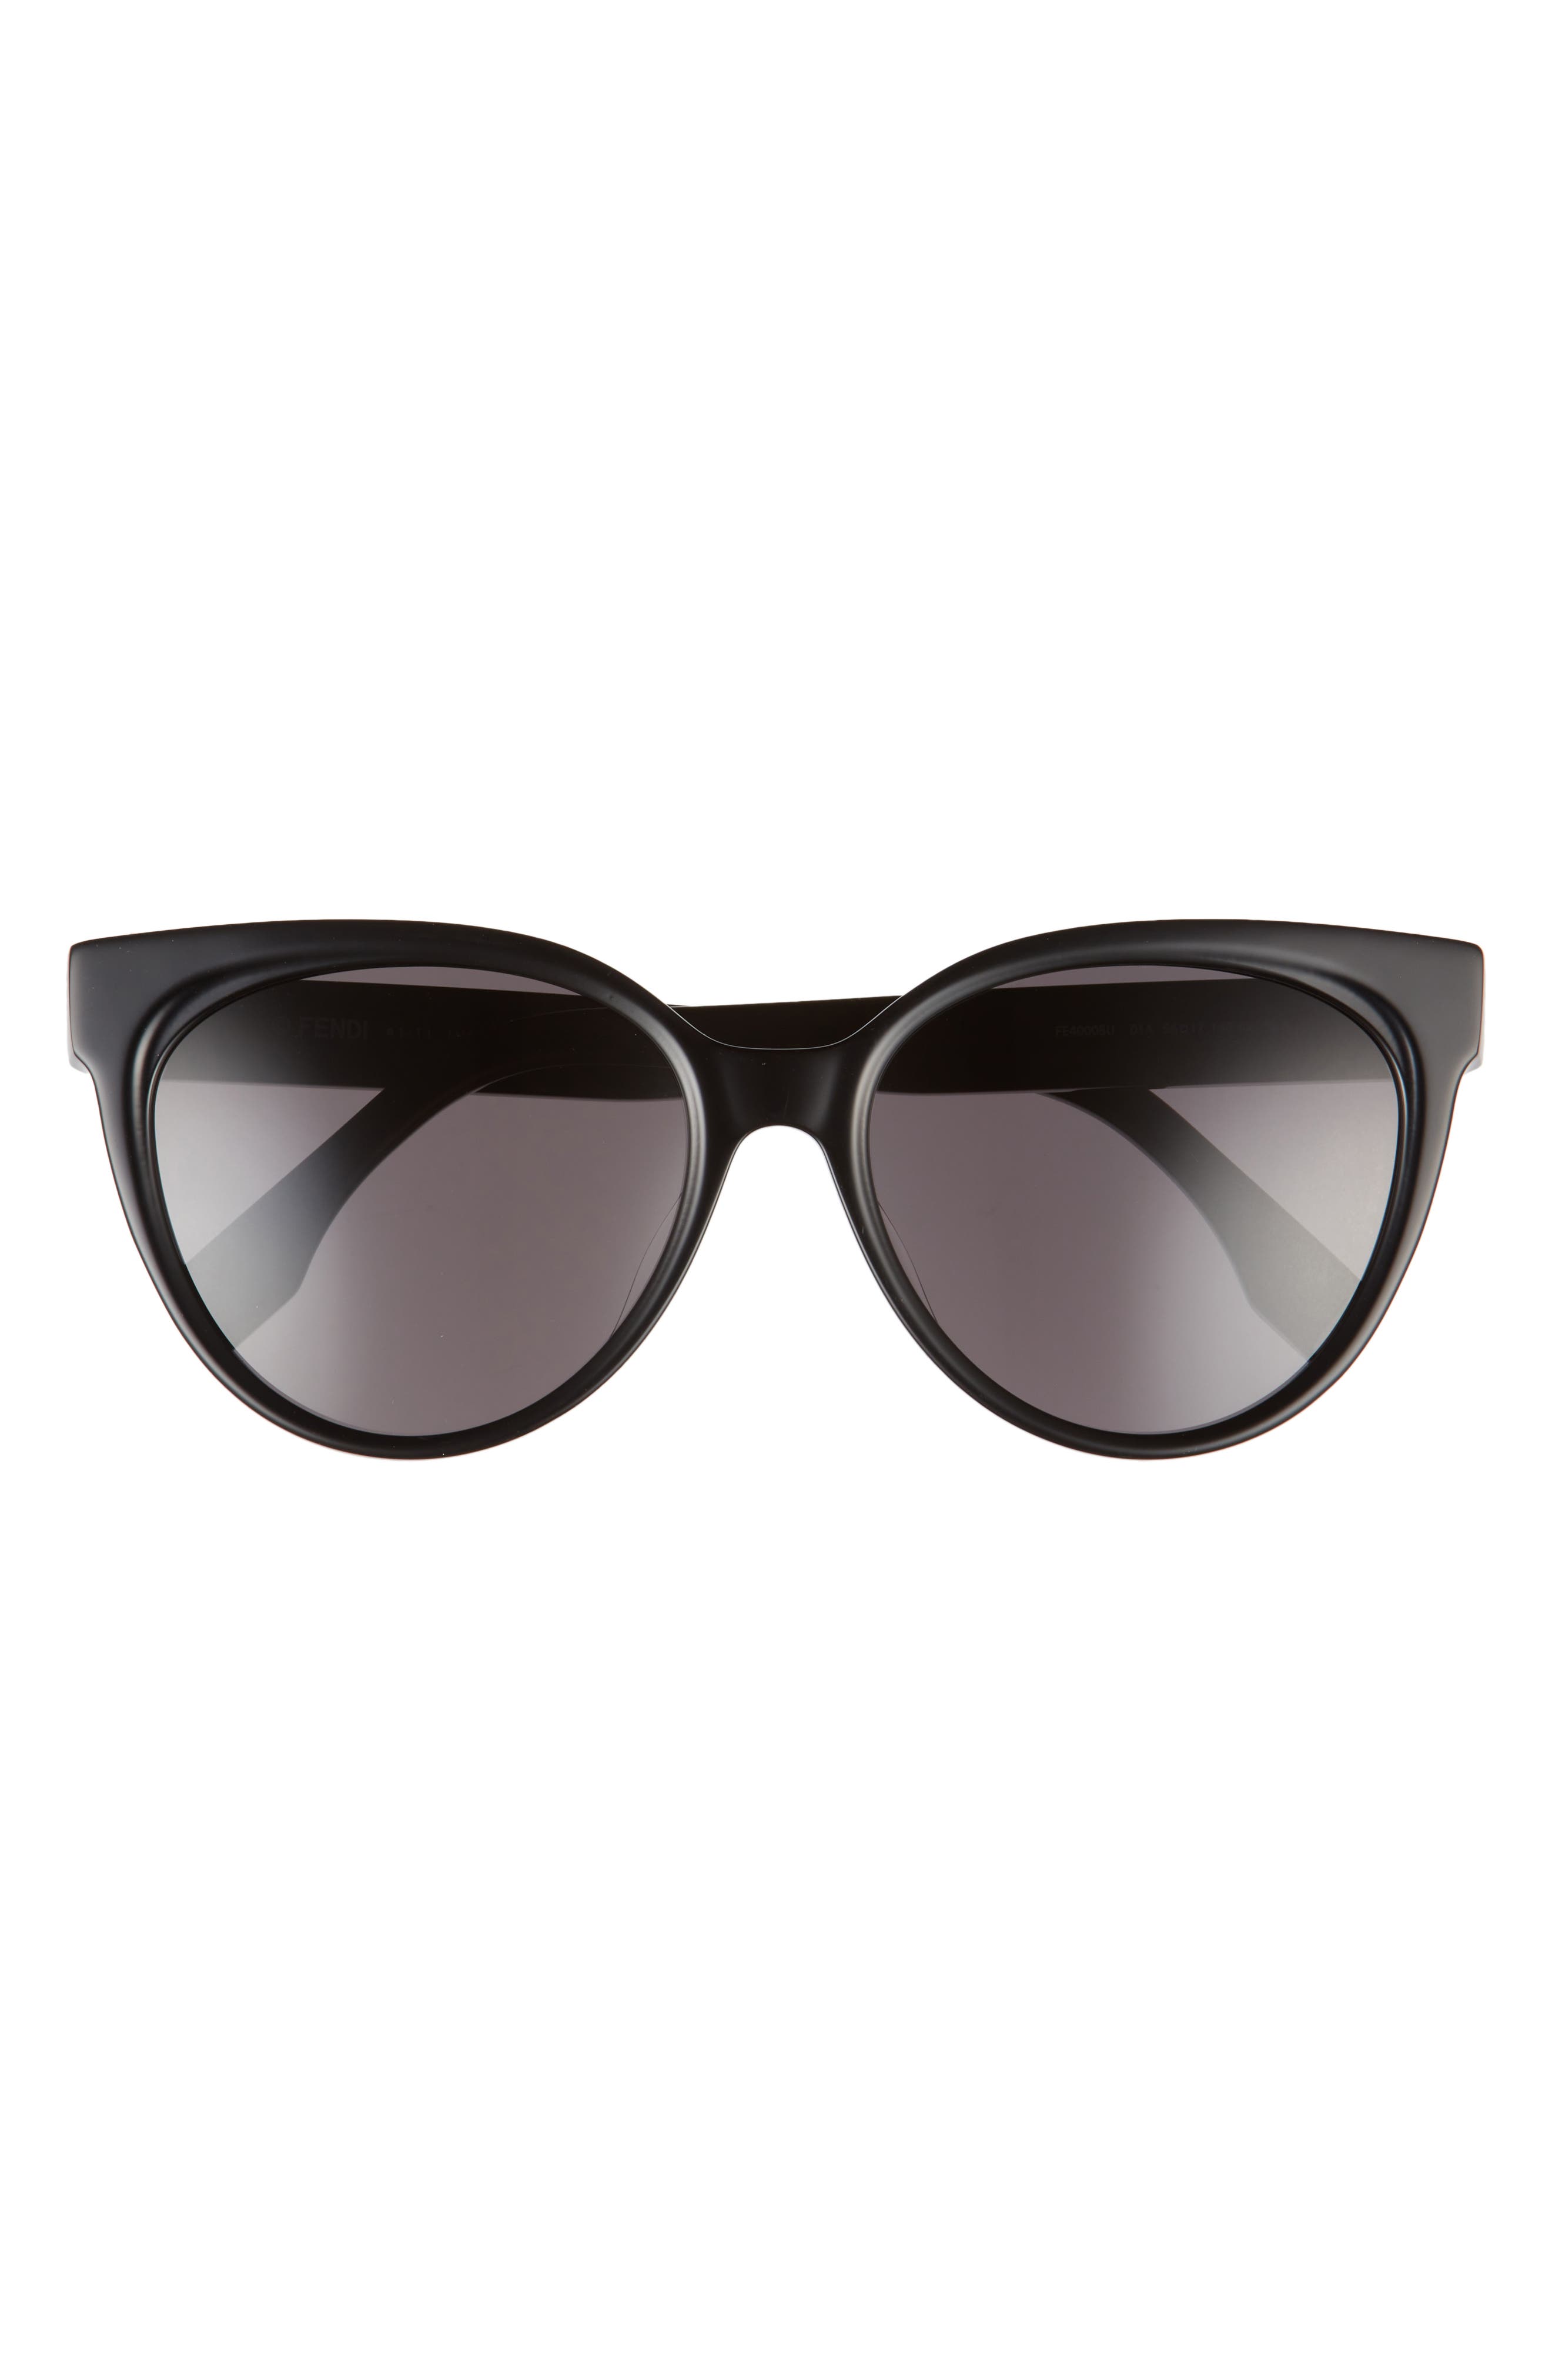 Fendi 56mm Cat Eye Sunglasses in Shiny Black /Smoke at Nordstrom